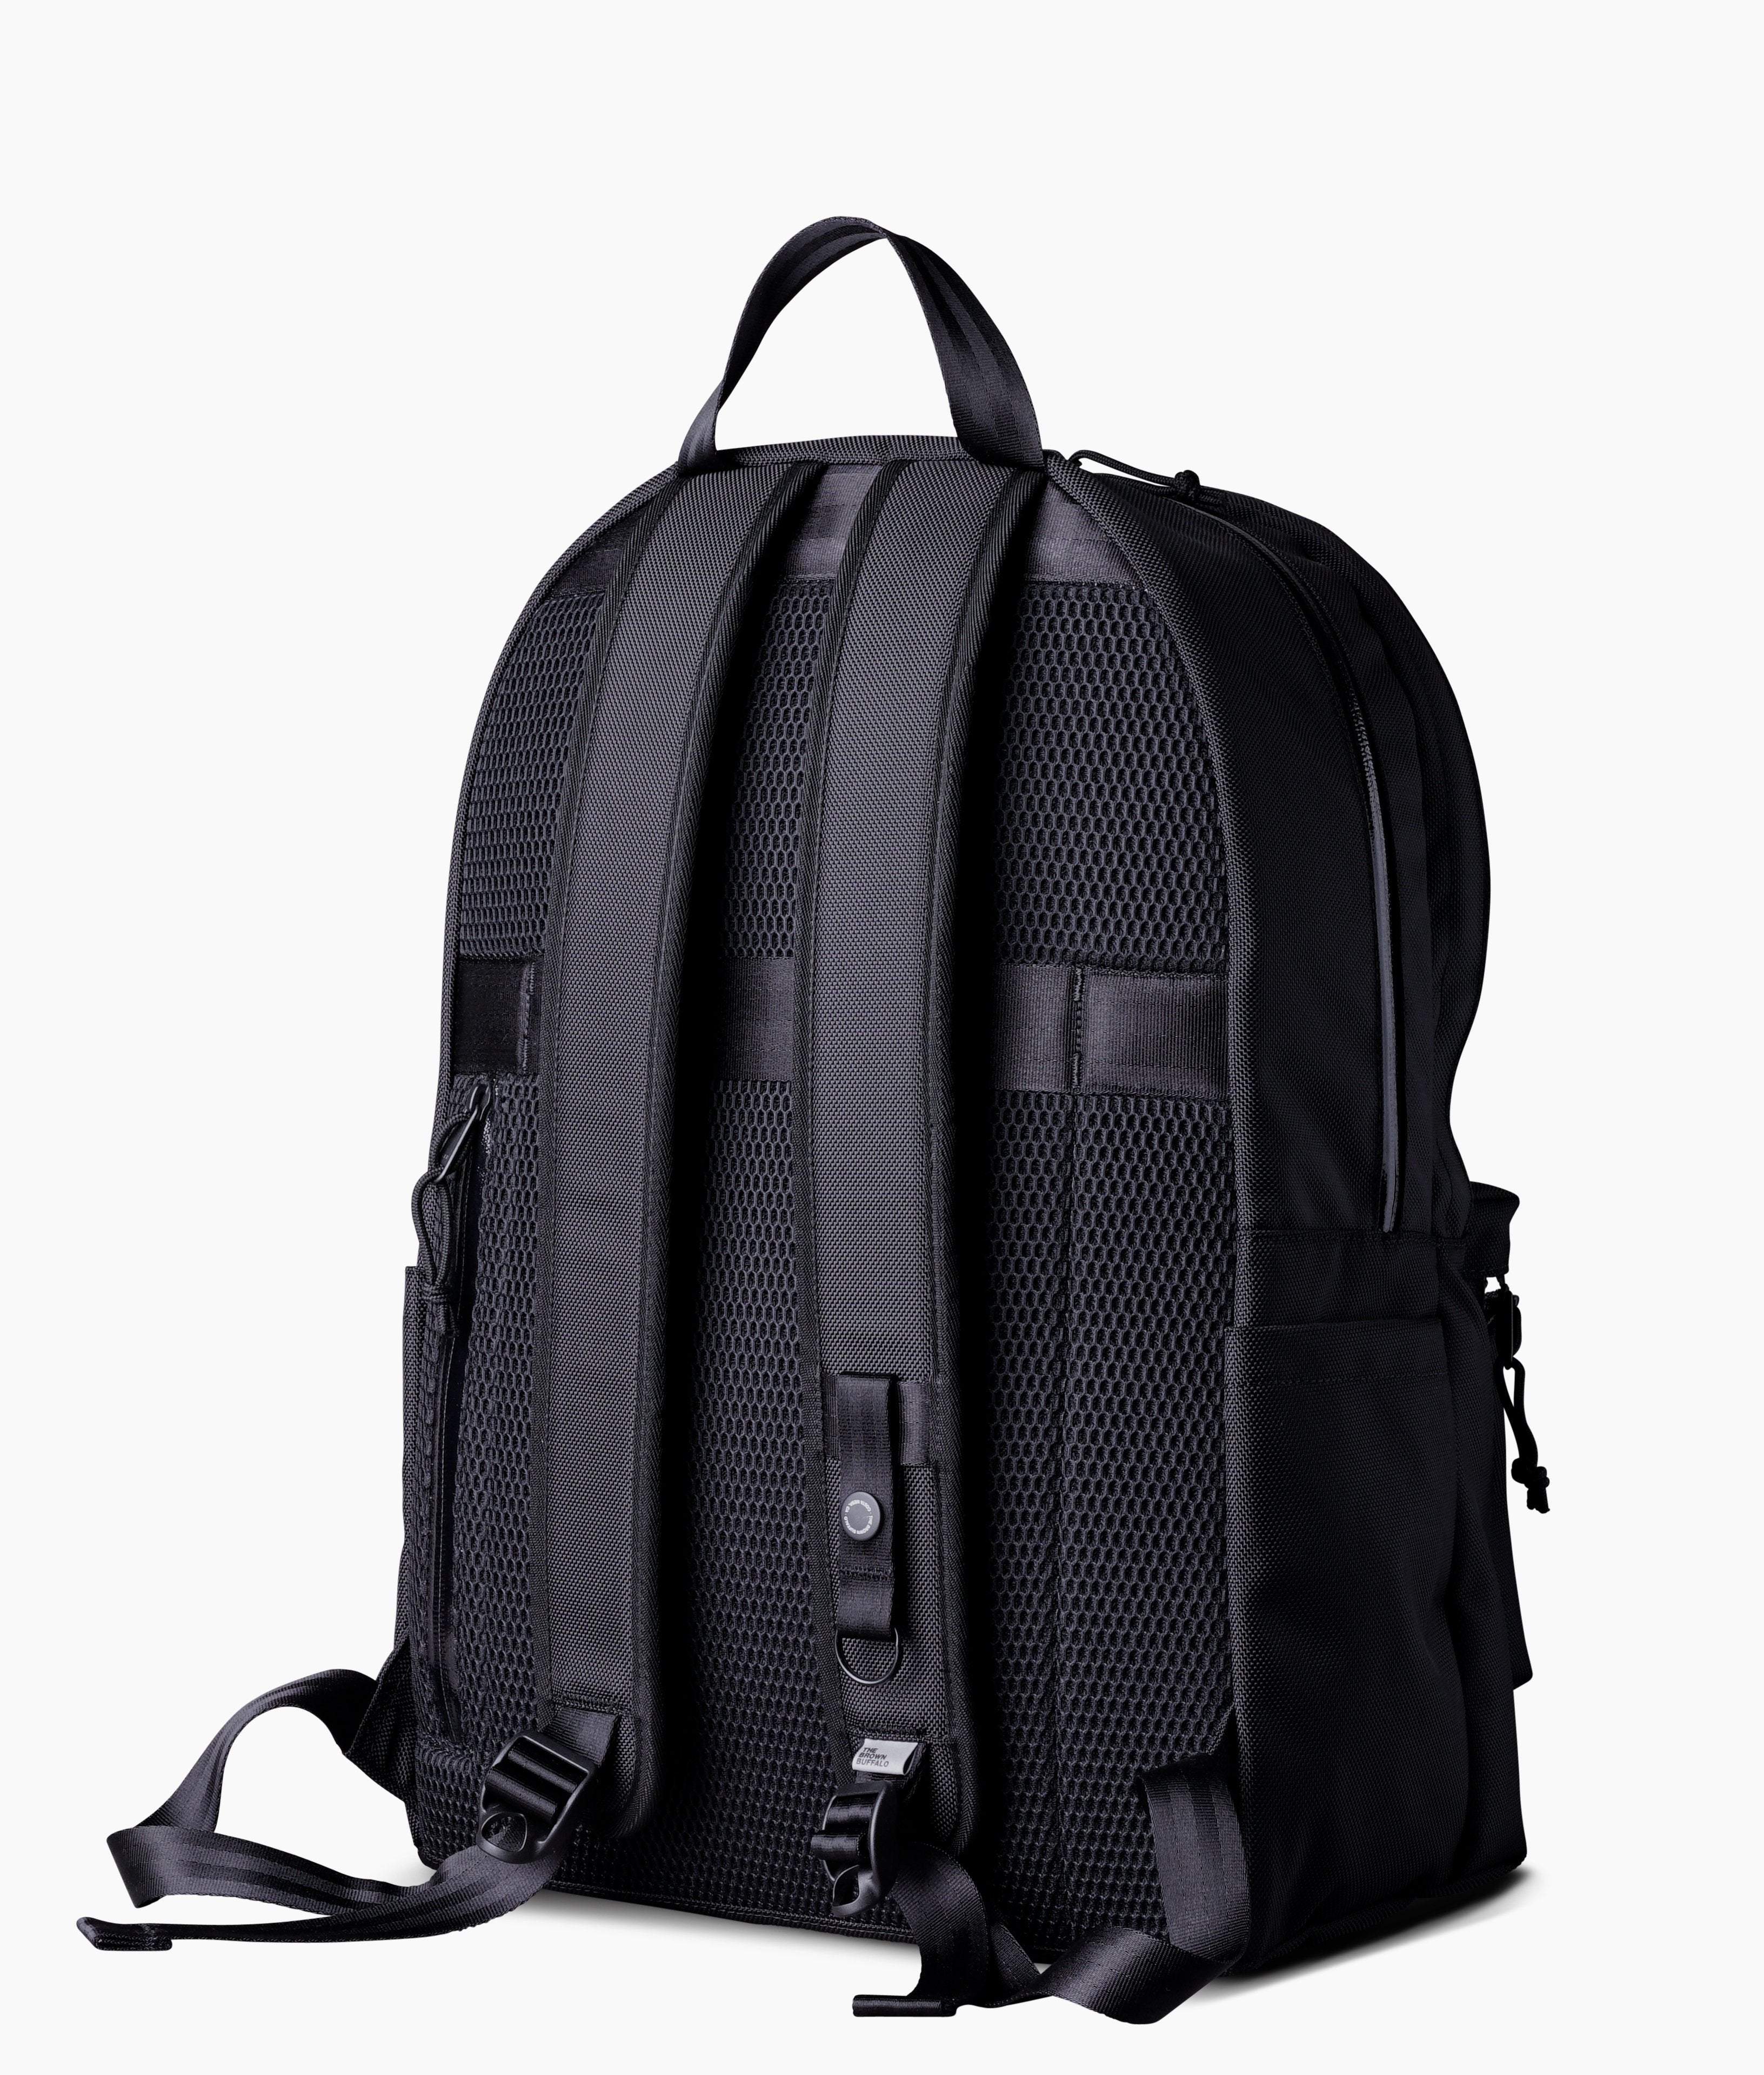 Standard Issue Backpack - 1680D Ballistic Black